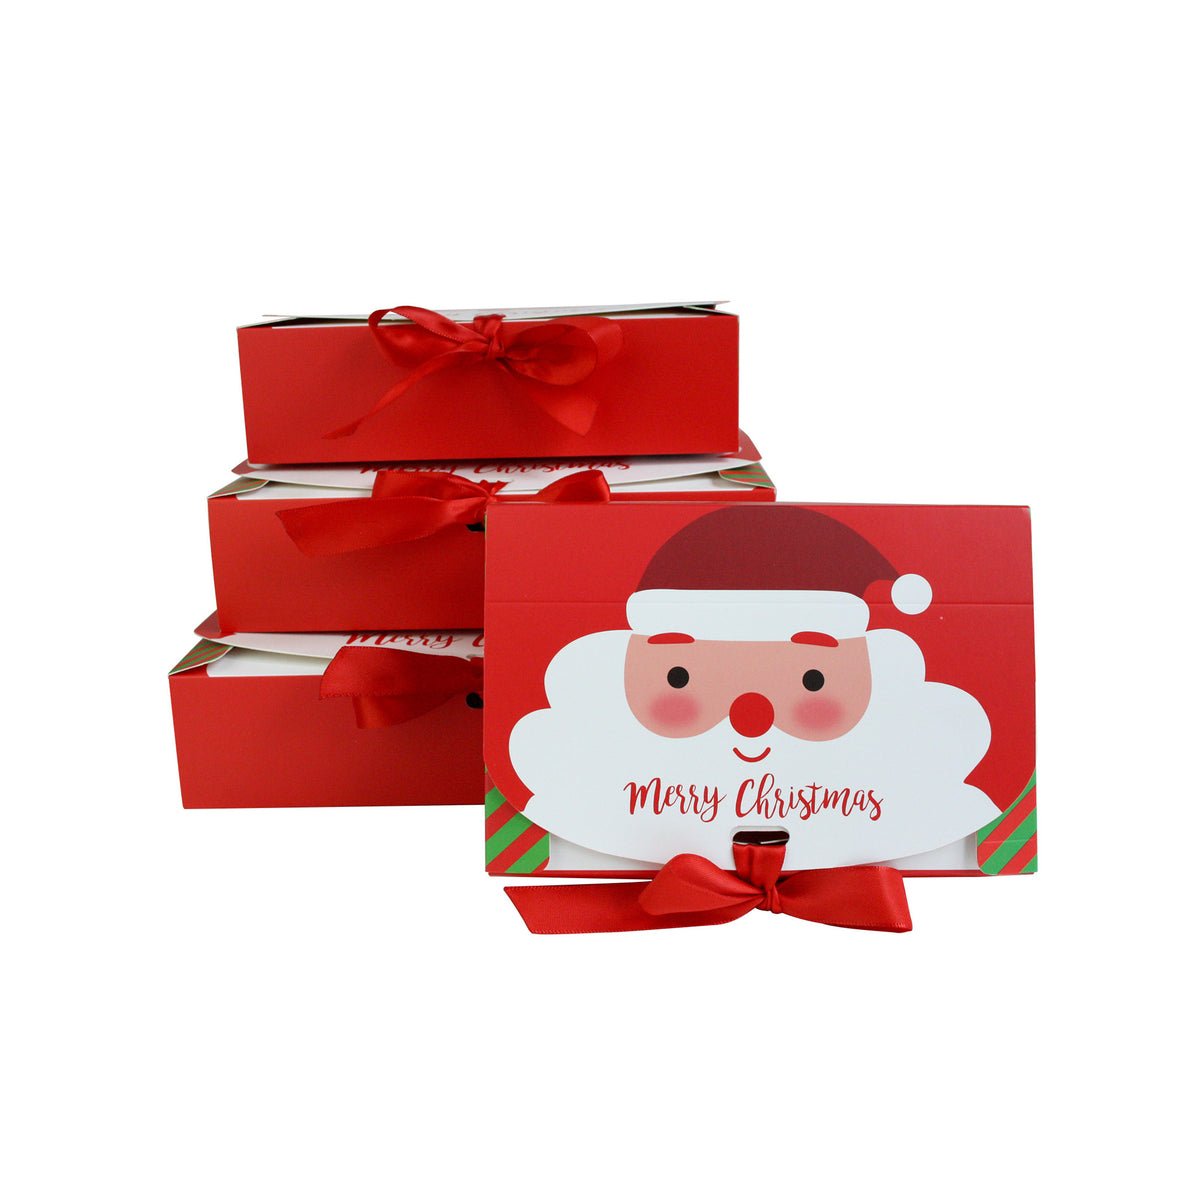 Pack of 12 Kraft Gift Box - Christmas Edition